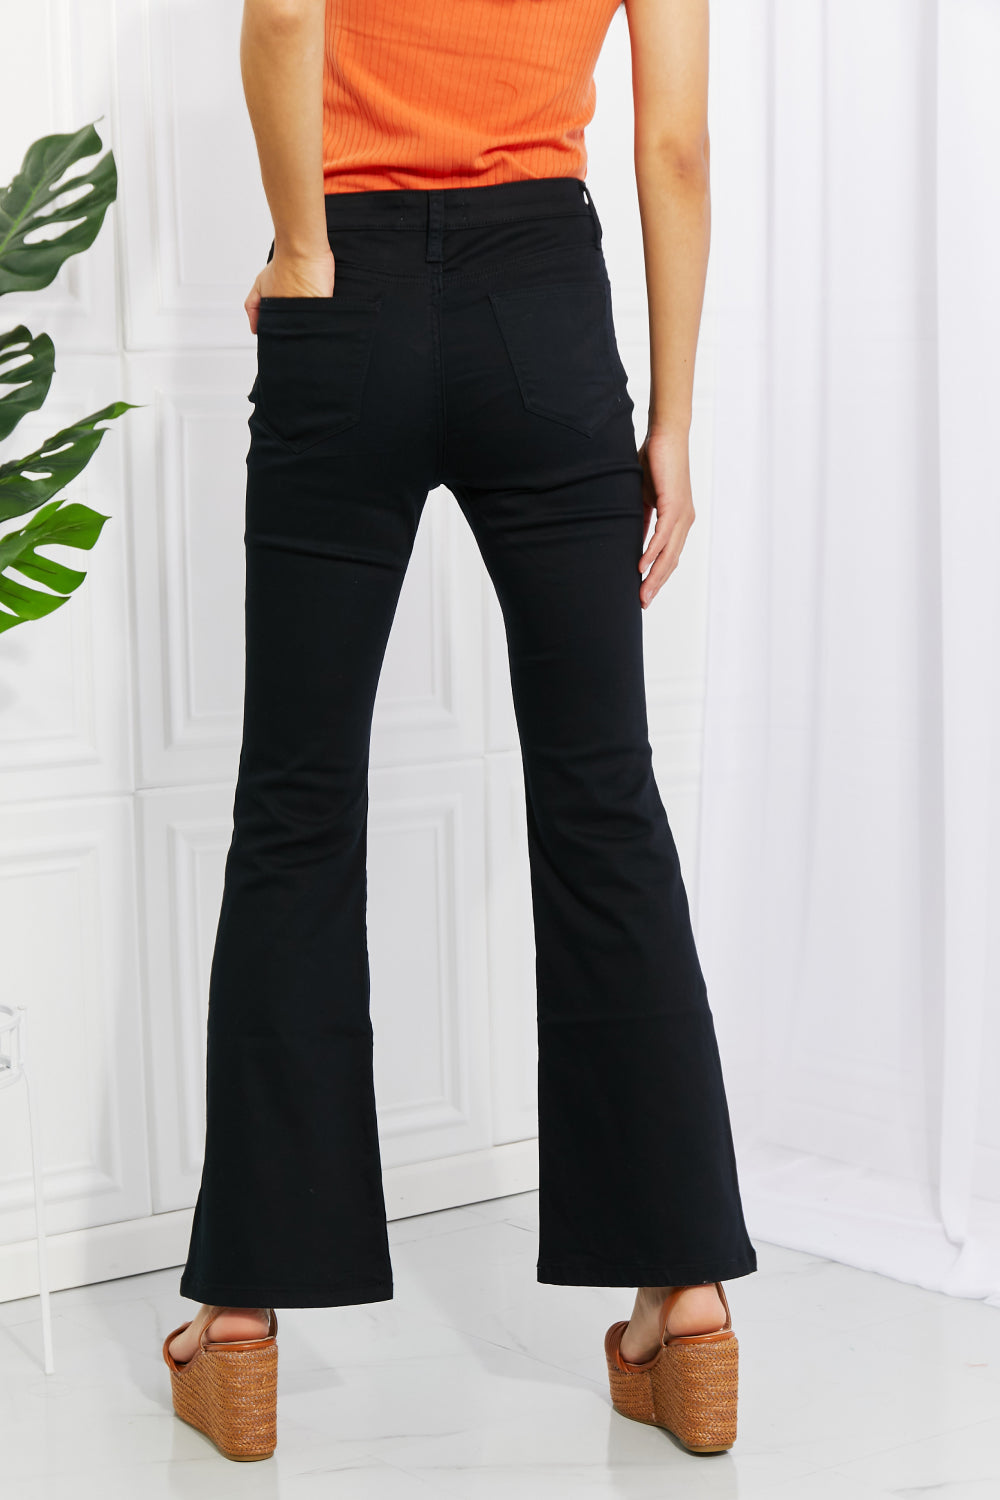 Zenana Clementine Full Size High-Rise Bootcut Pants in Black | Pants - CHANELIA